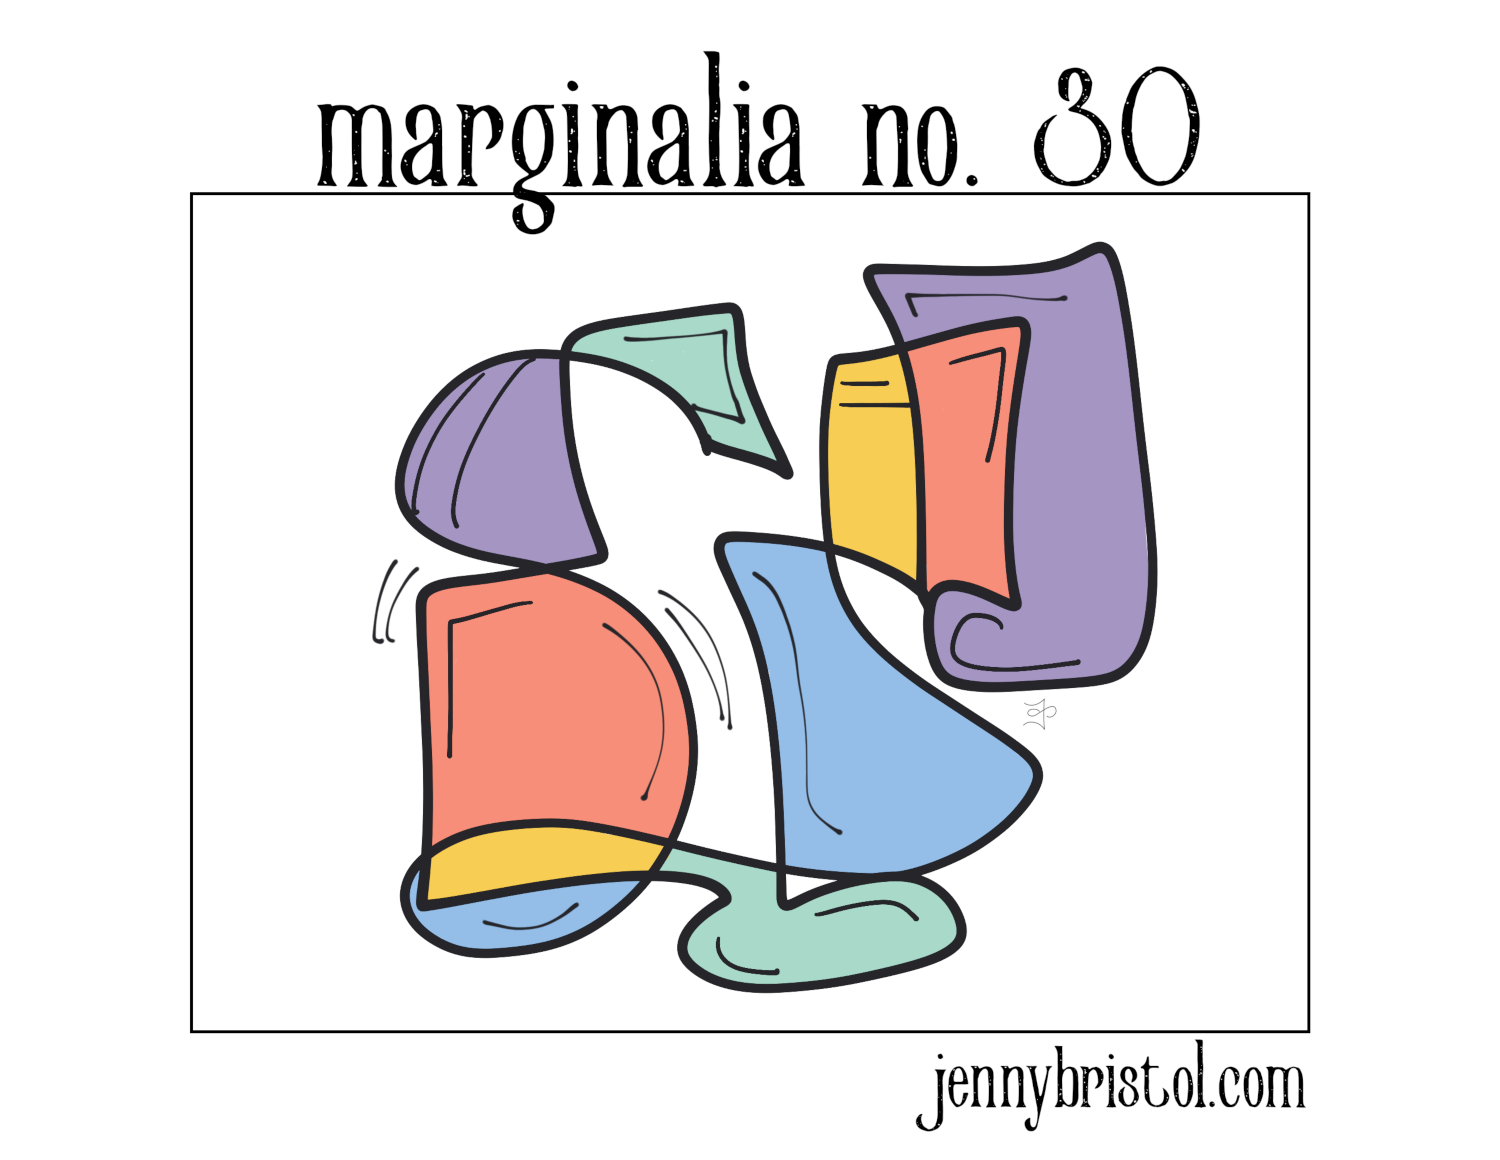 Marginalia no. 30 to post